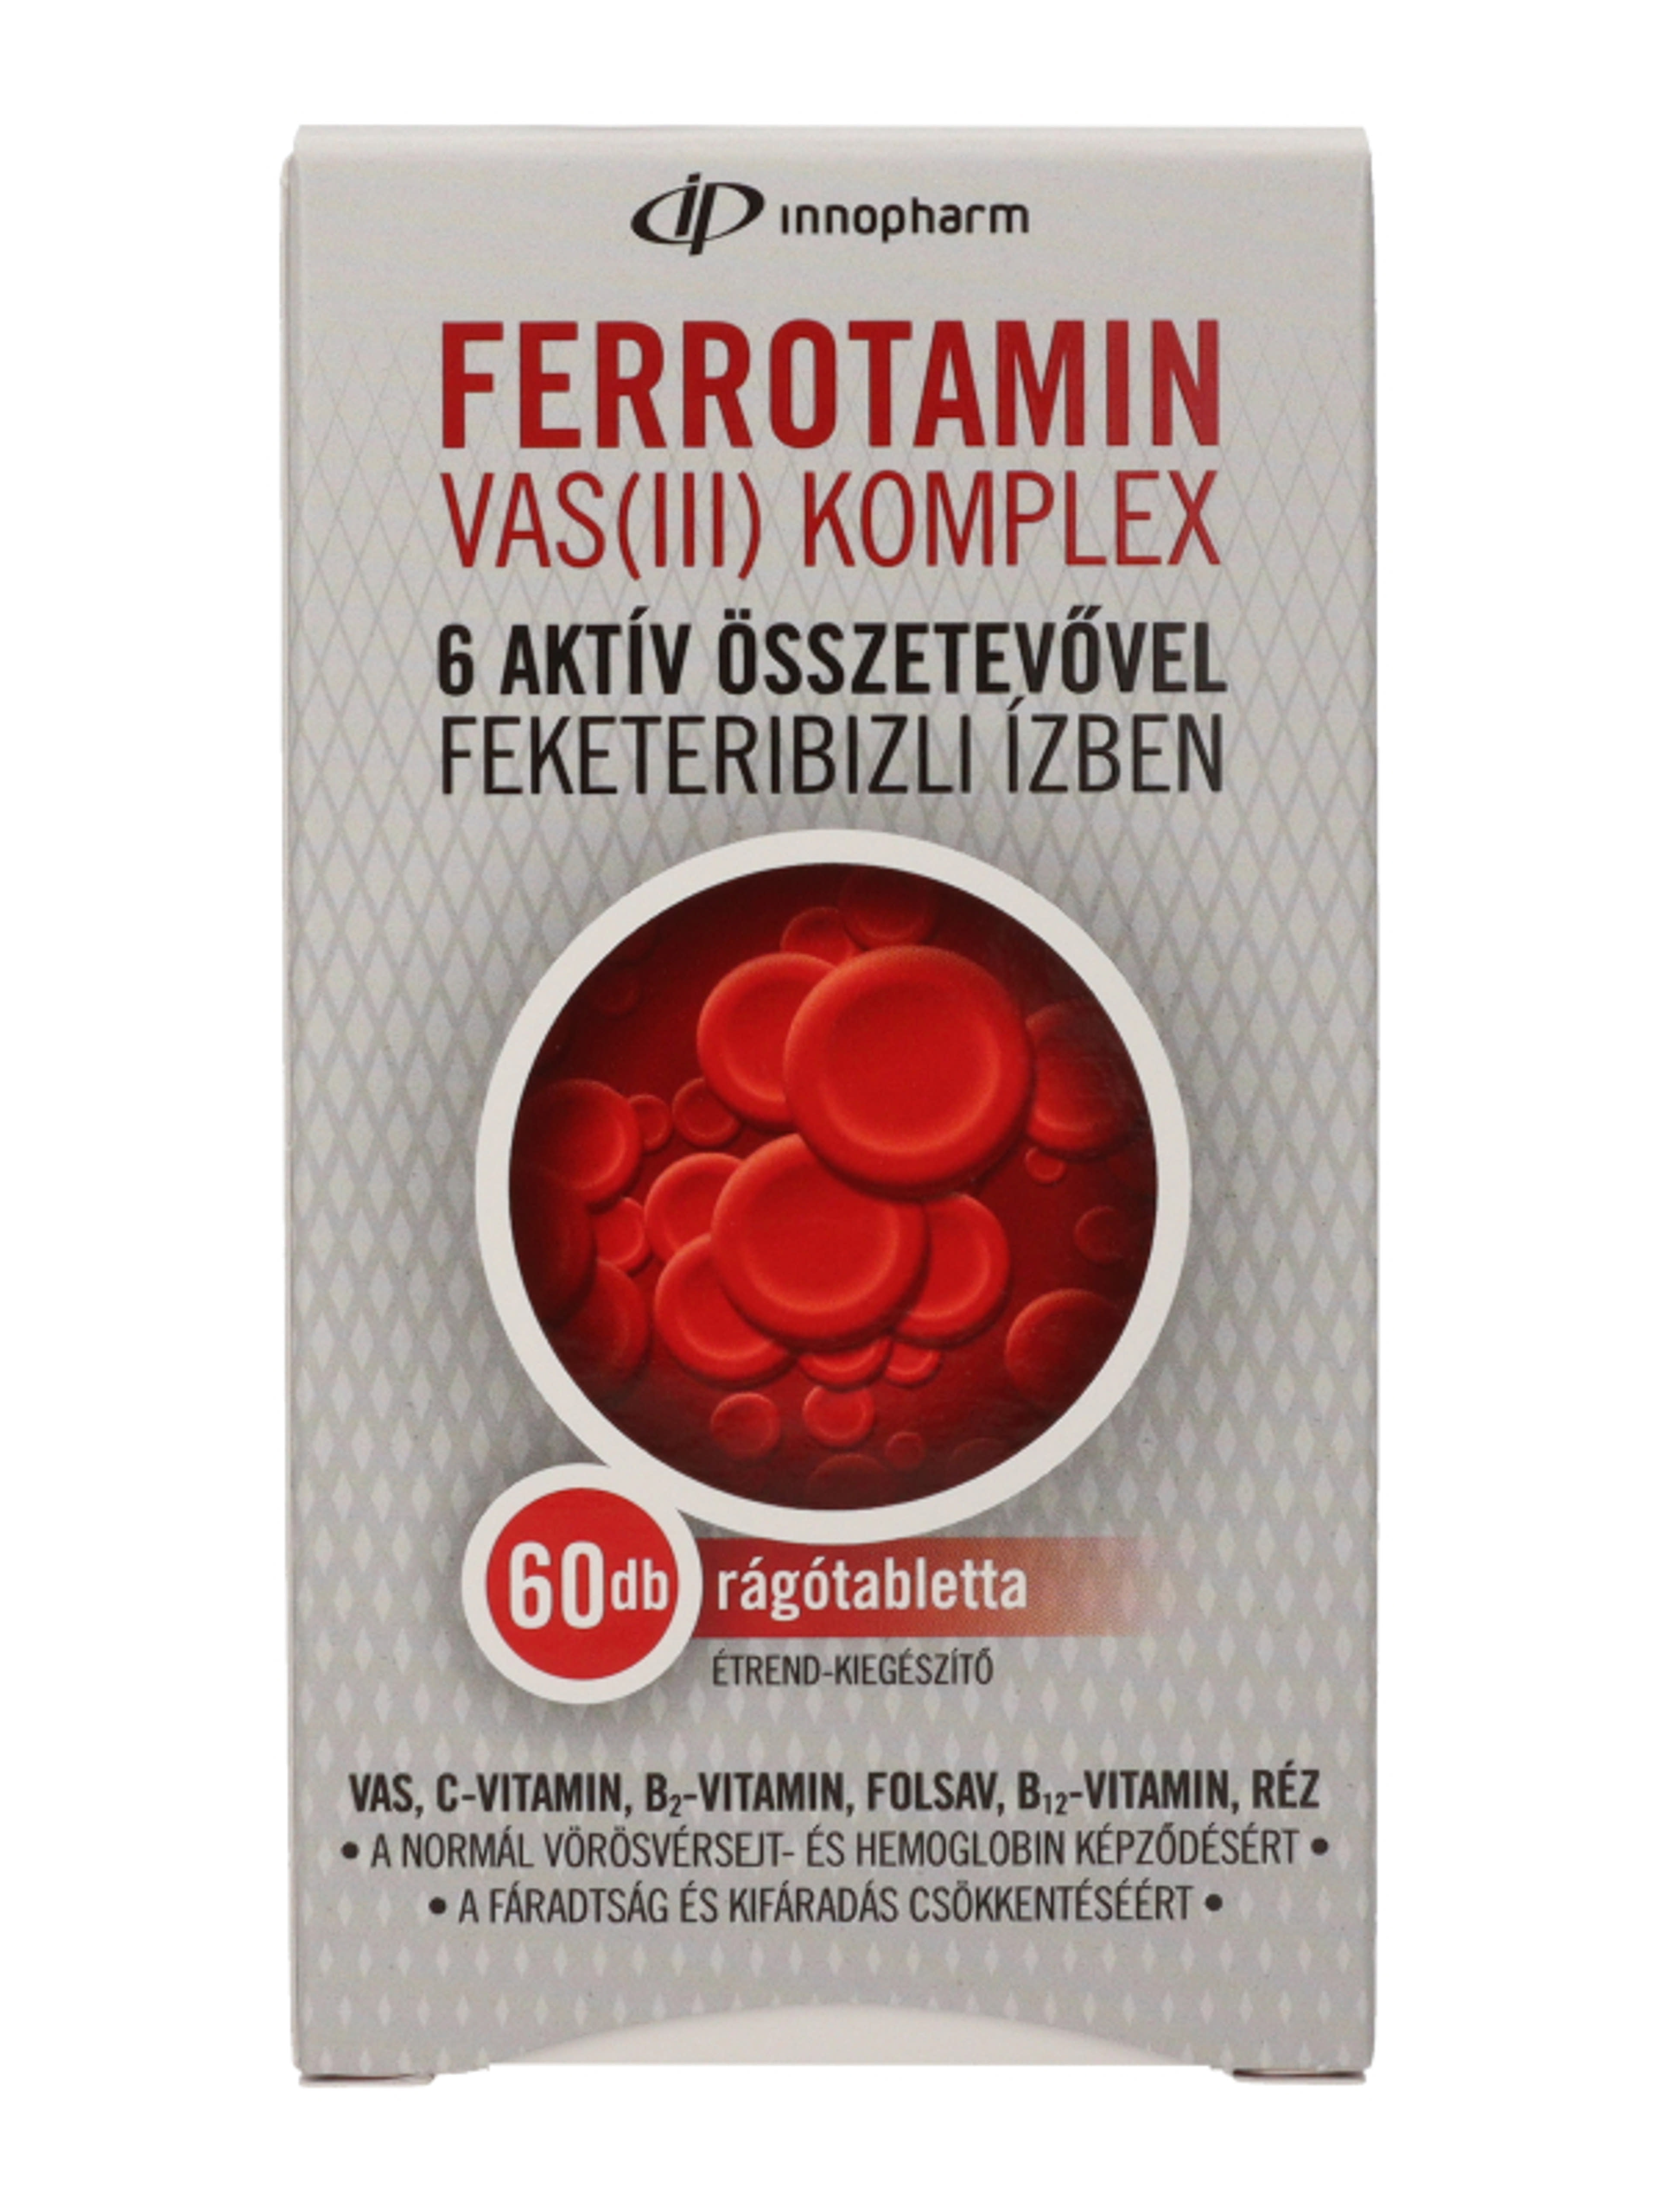 Innopharm ferrotamin vas komplex rágó tabletta - 60 db-2